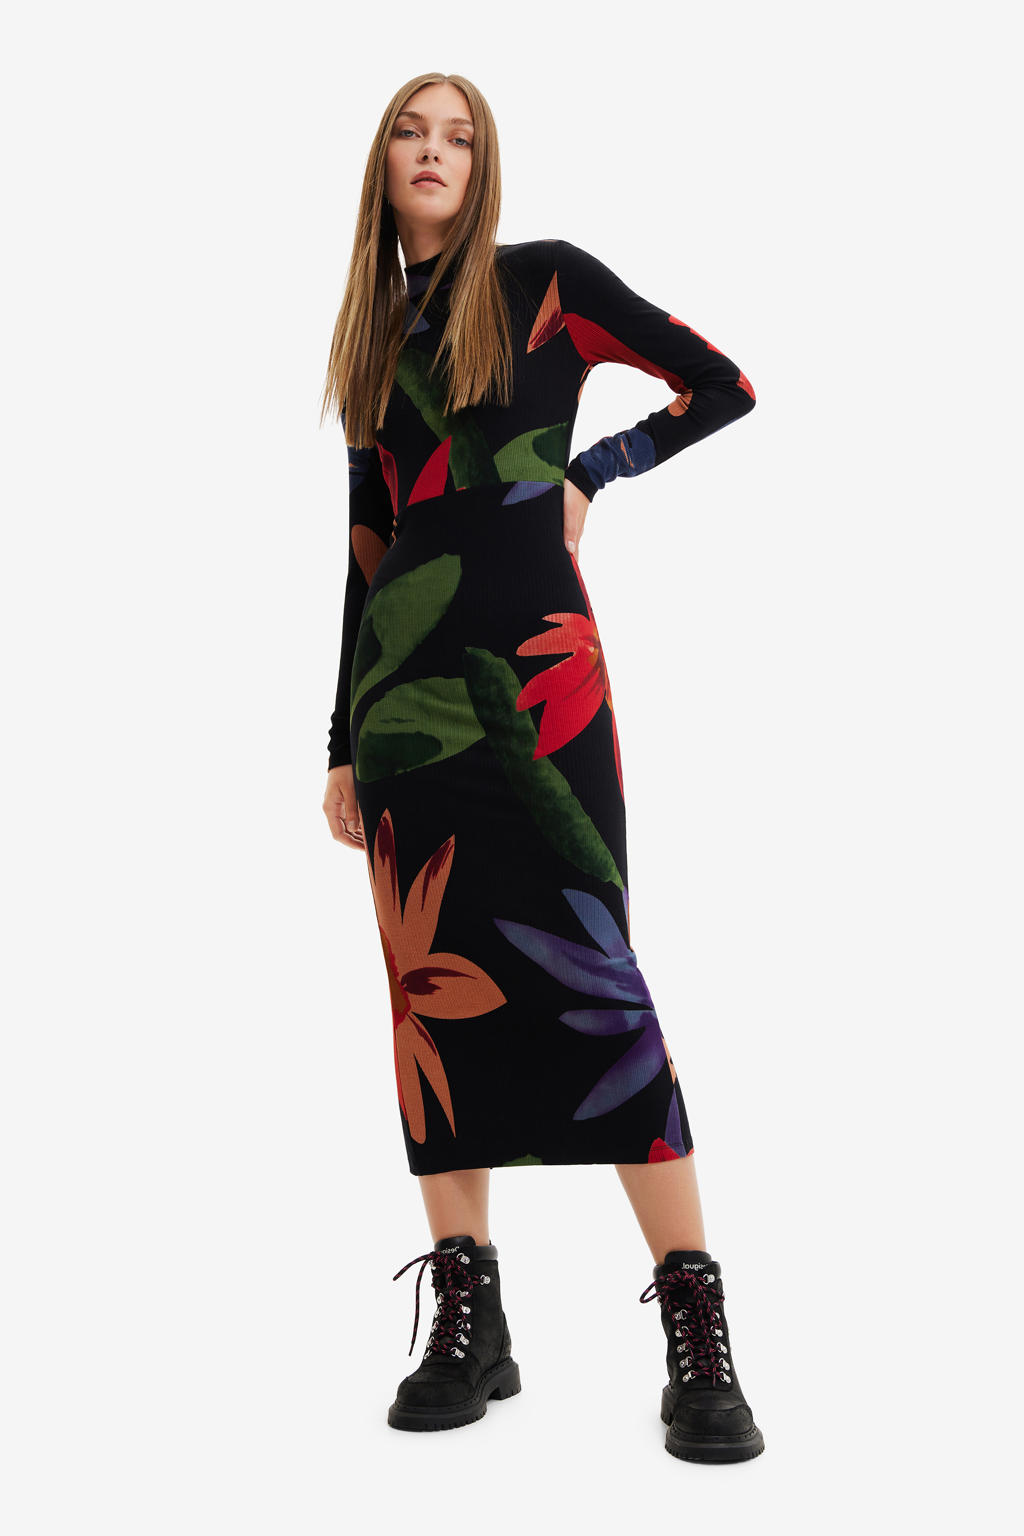 Desigual gebloemde ribgebreide maxi jurk zwart/groen/rood/blauw